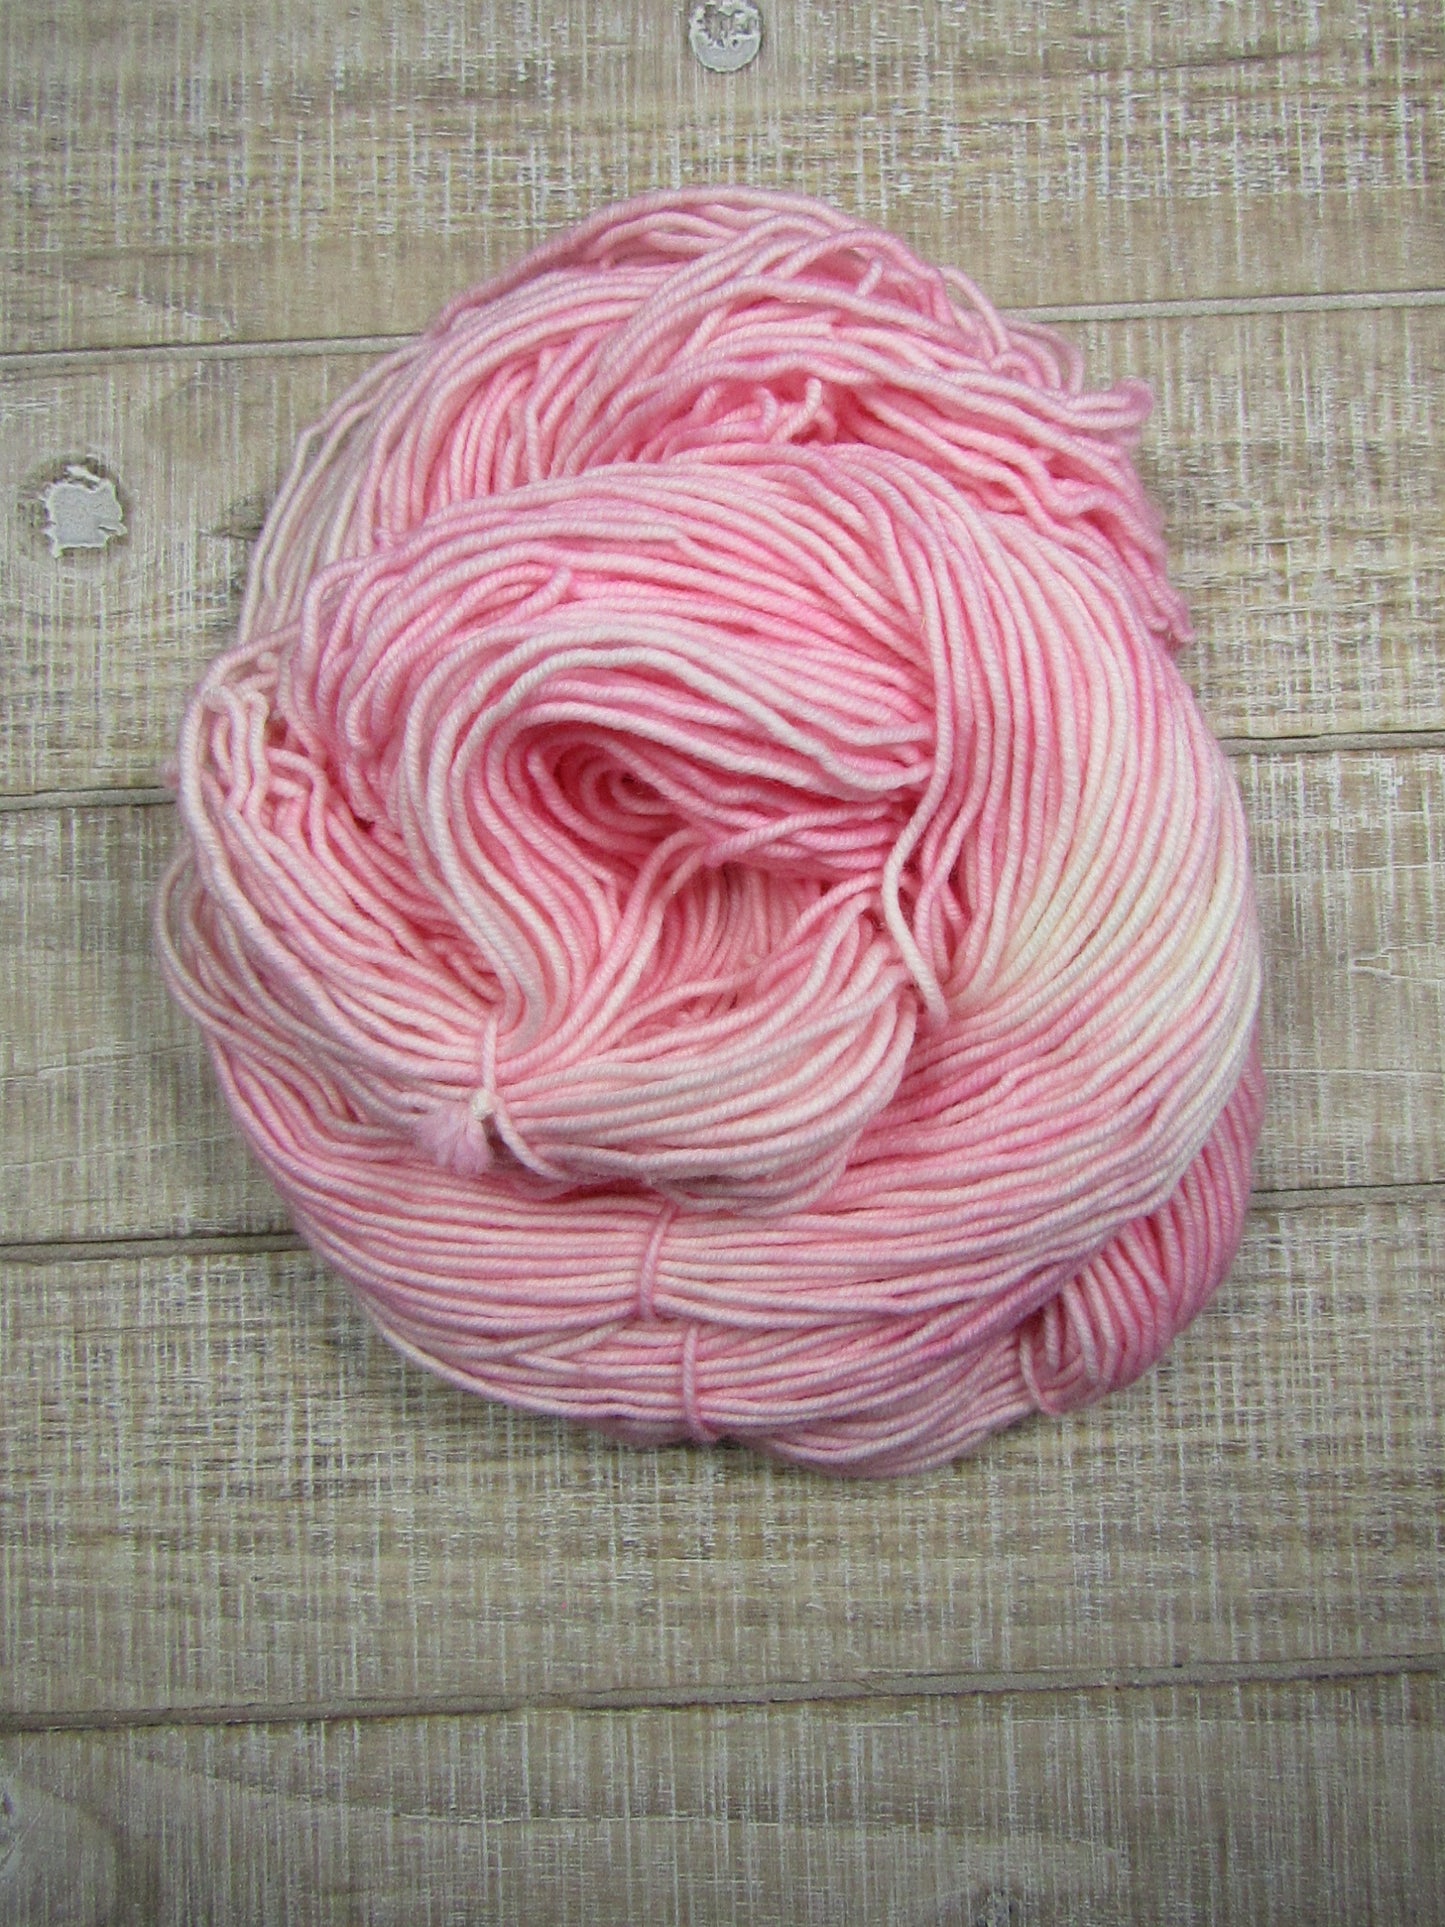 Hand-dyed yarn - Pink Zelda Merino/Cashstyle nylon worsted weight yarn in princess pink